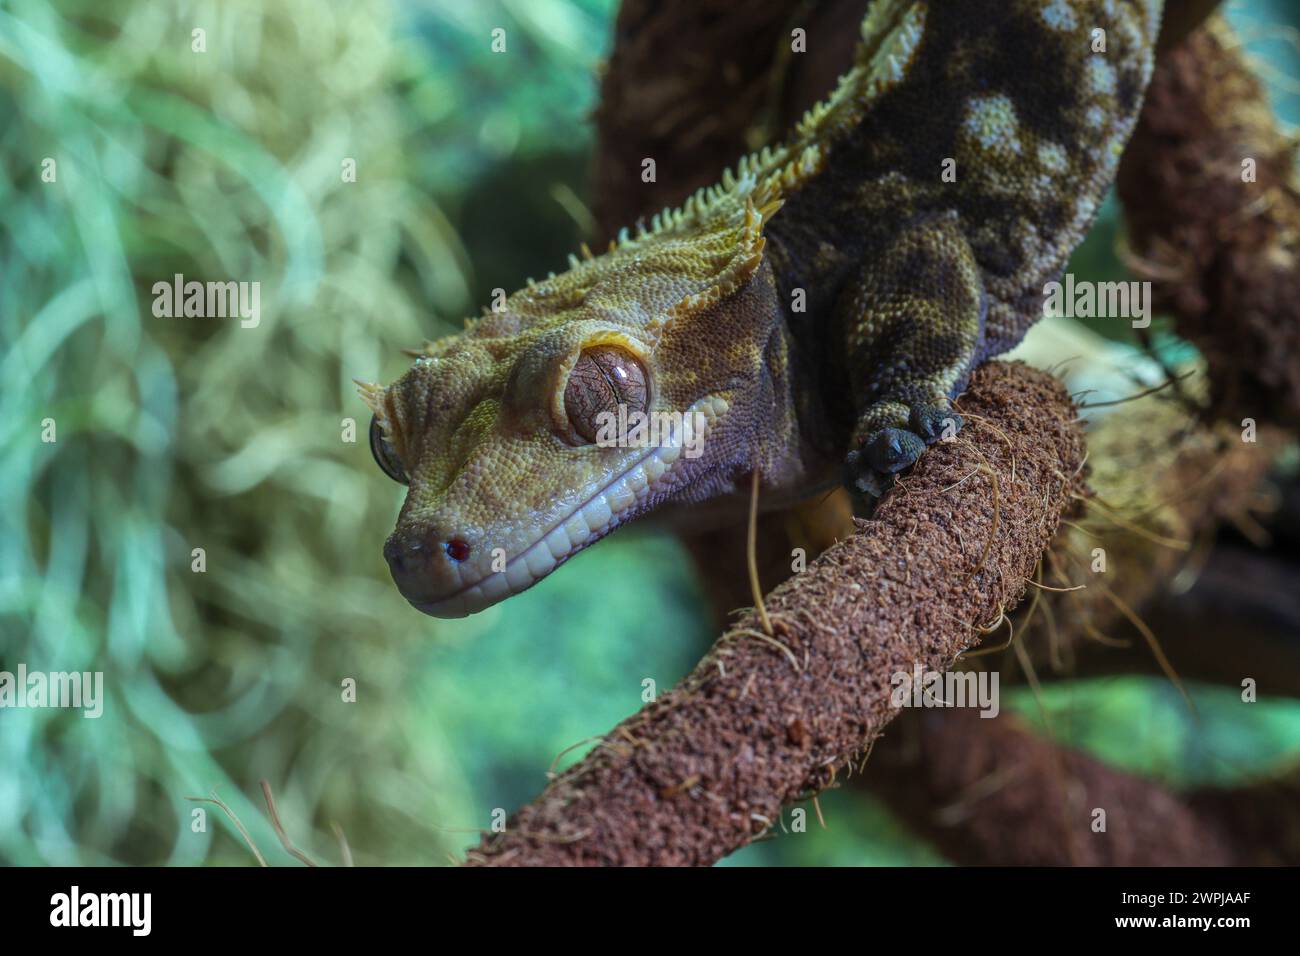 Crested gecko on a branch - Rhacodactylus ciliatus, Correlophus ciliatus Stock Photo